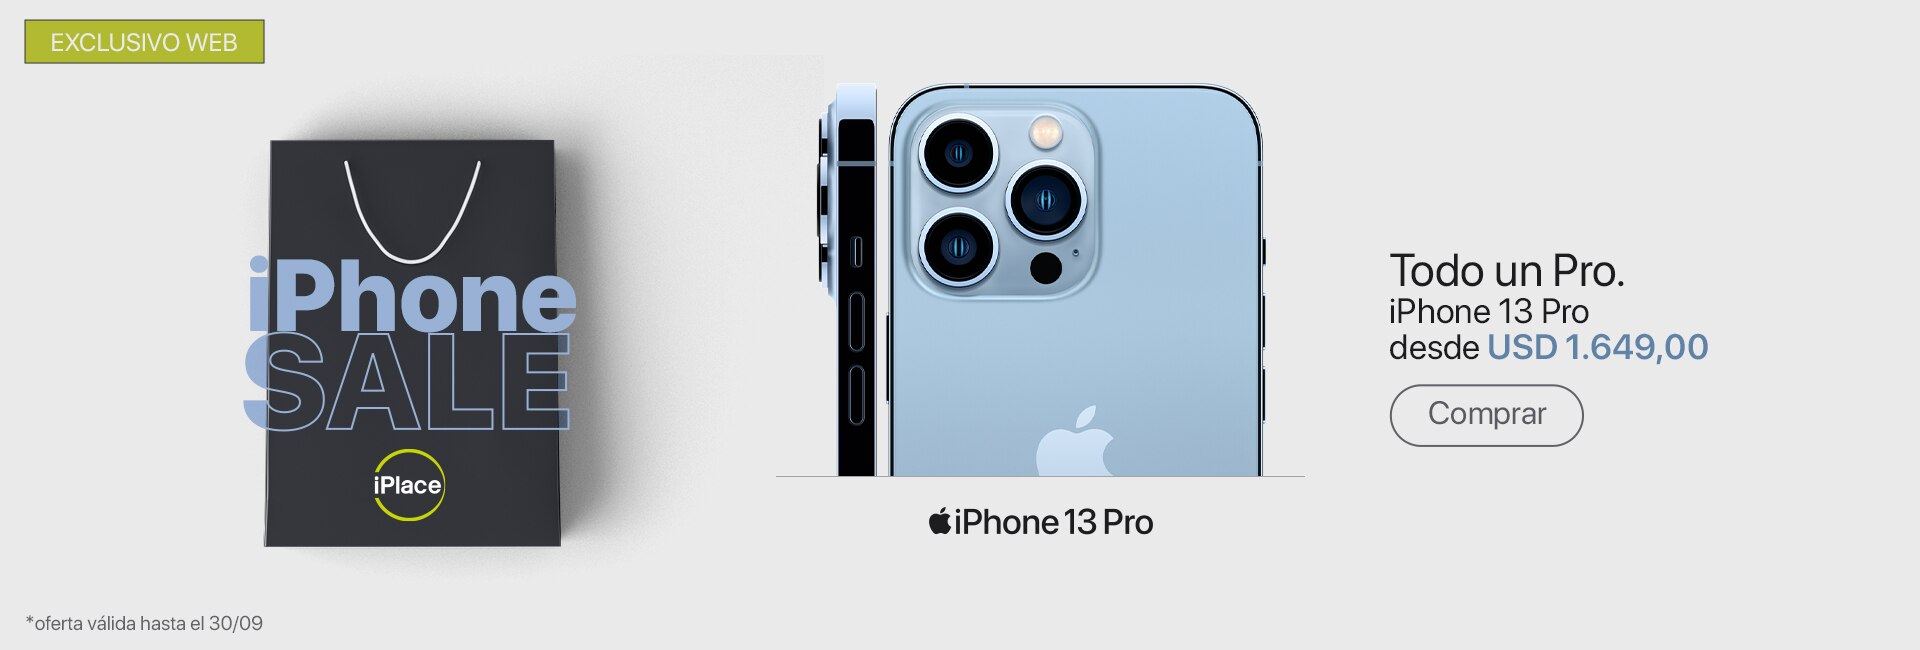 iPhone Sale | iPhone 13 Pro